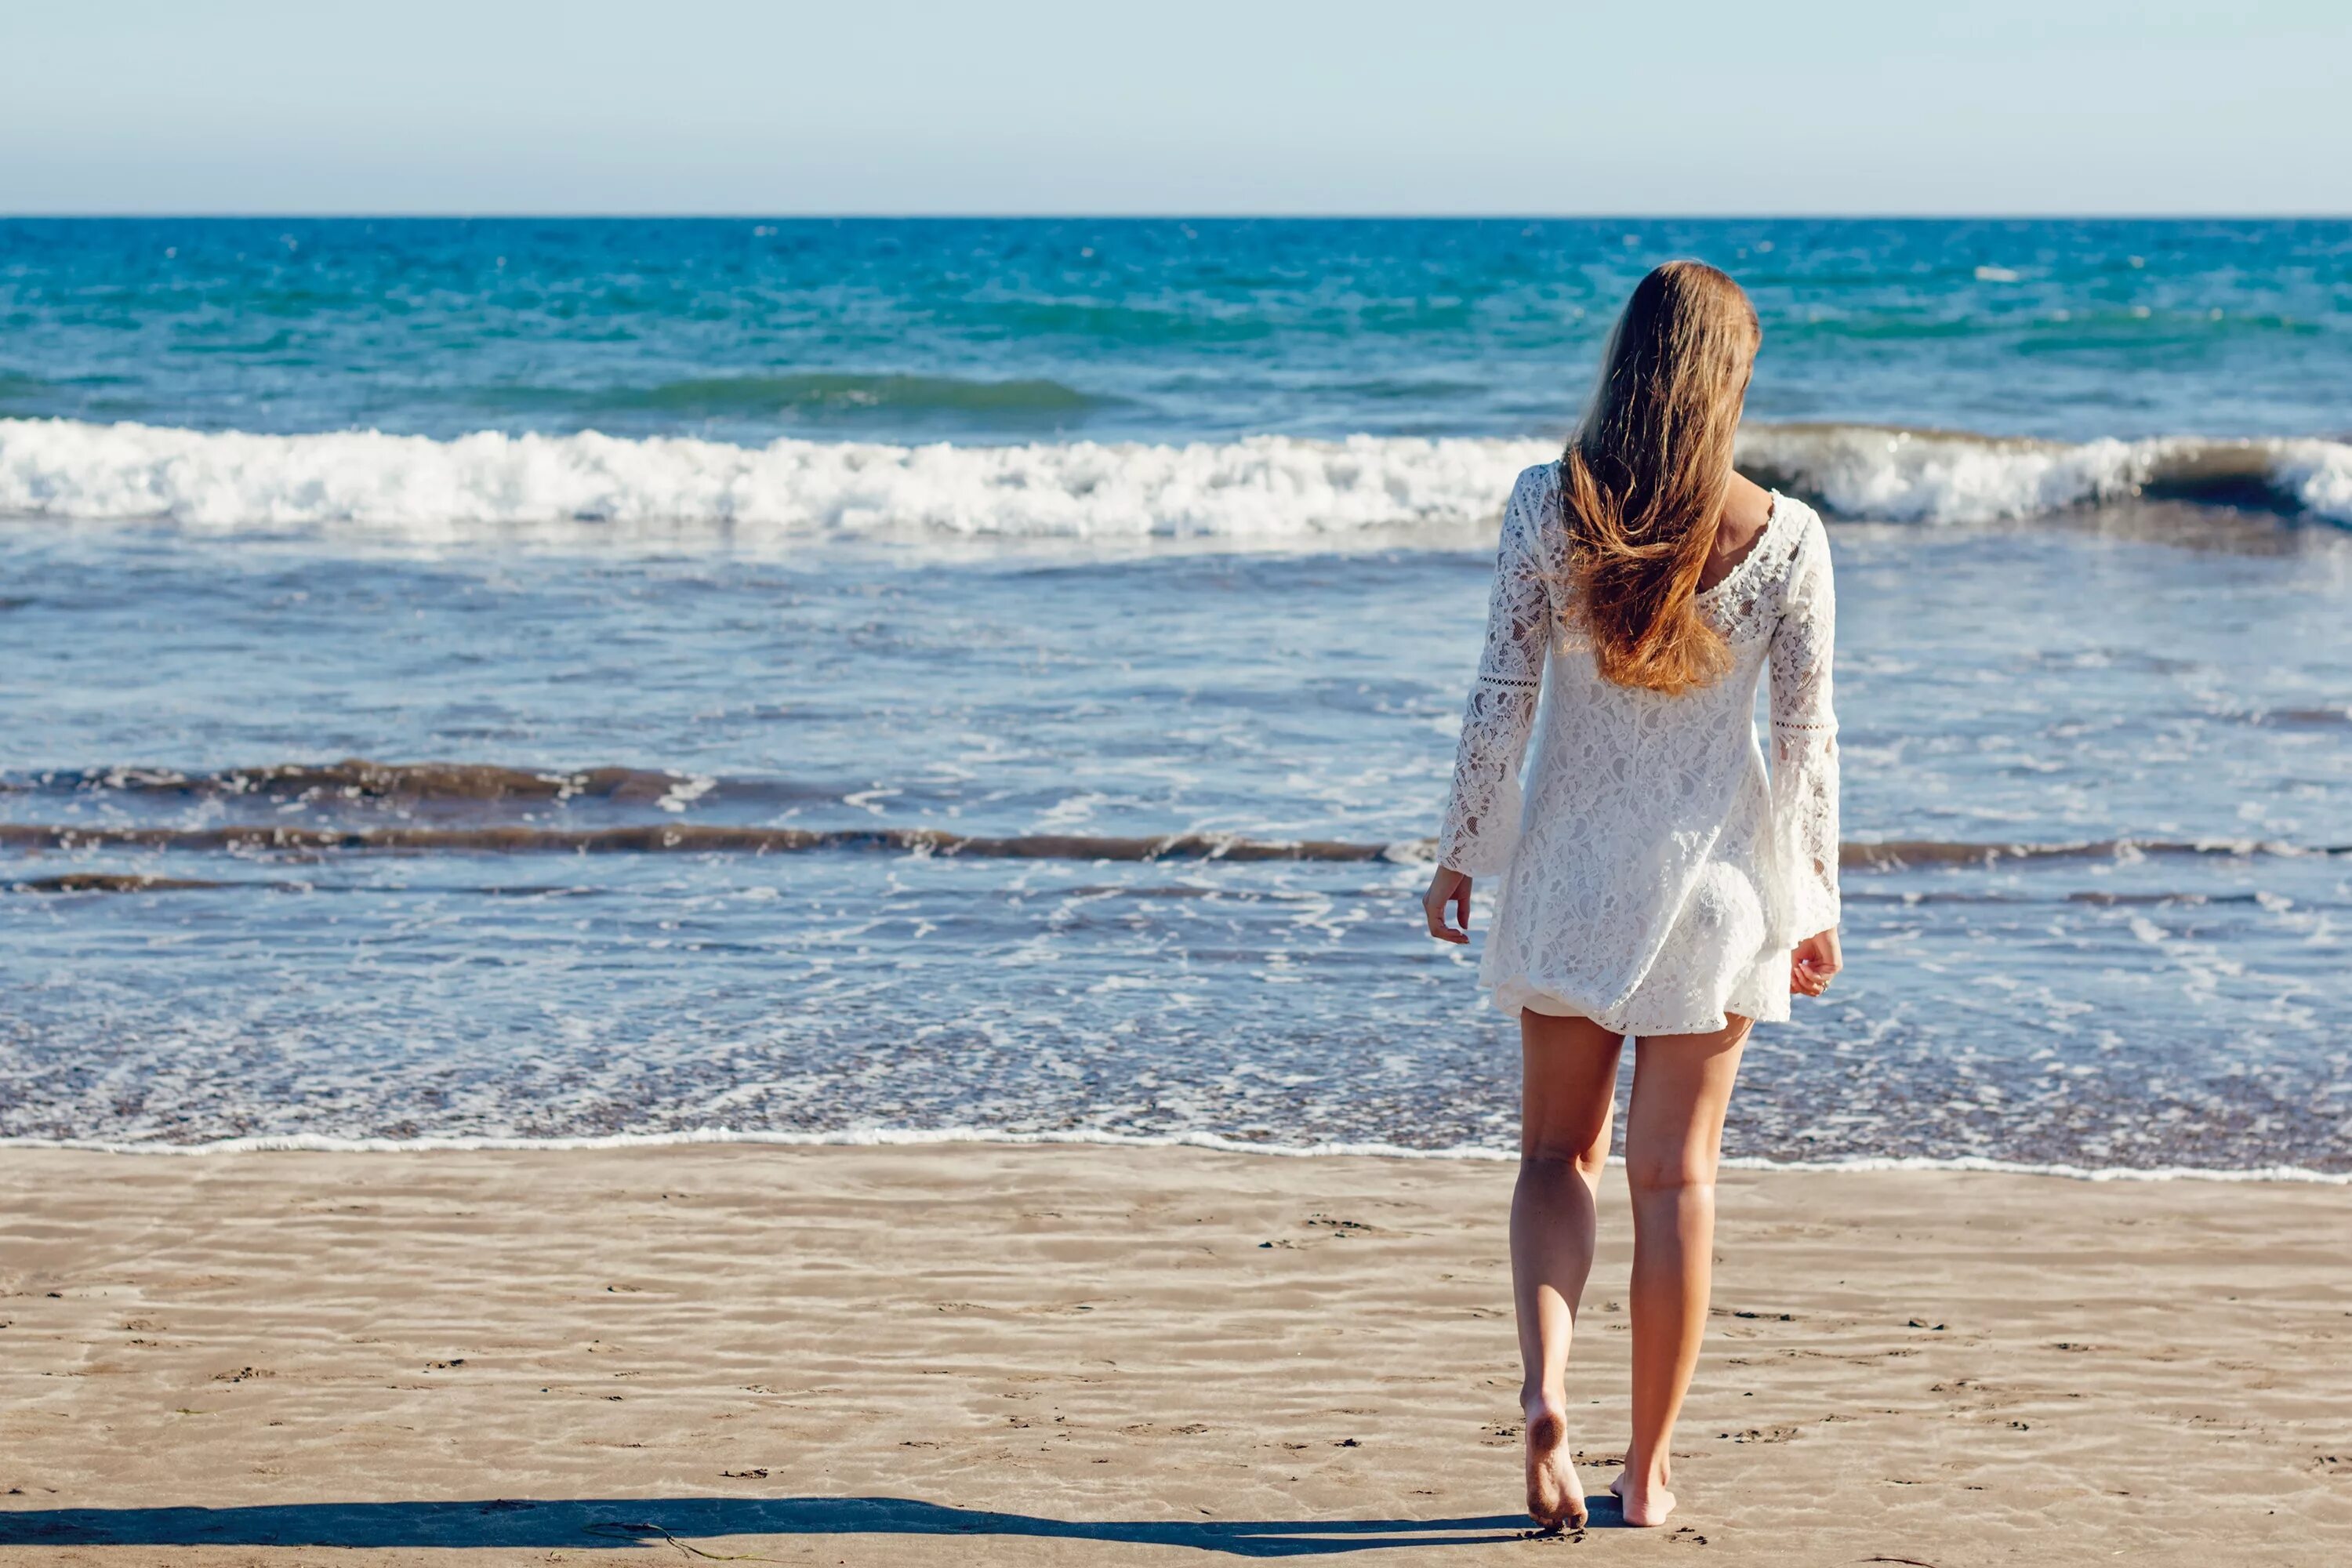 Фото девушки спиной на море. Девушка-море. Женщина на берегу моря. Фотосессия на море. Девушка на берегу моря.